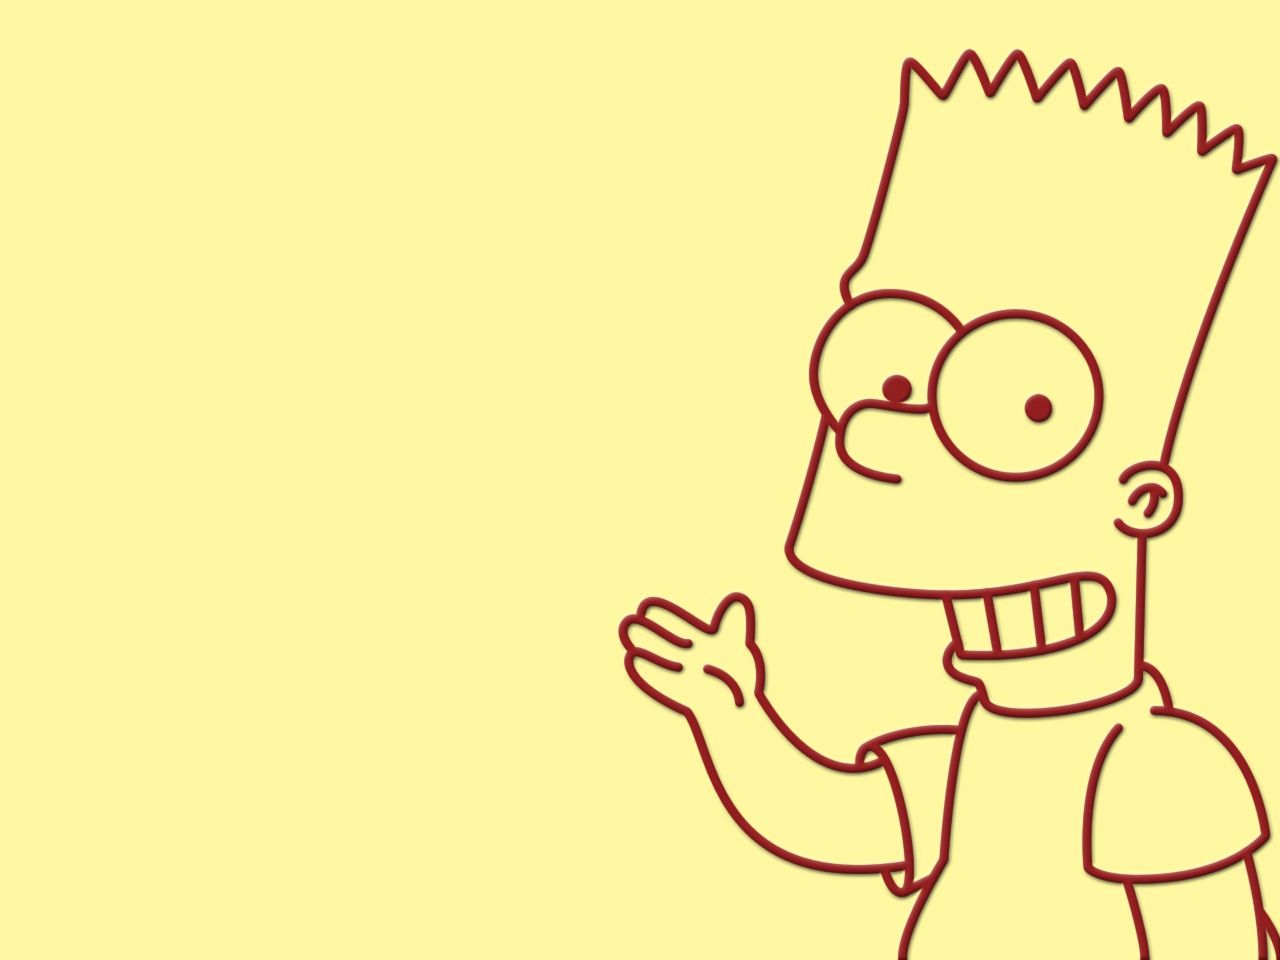 Bart Simpson Background | Free Backgrounds for Facebook, Google+ ...